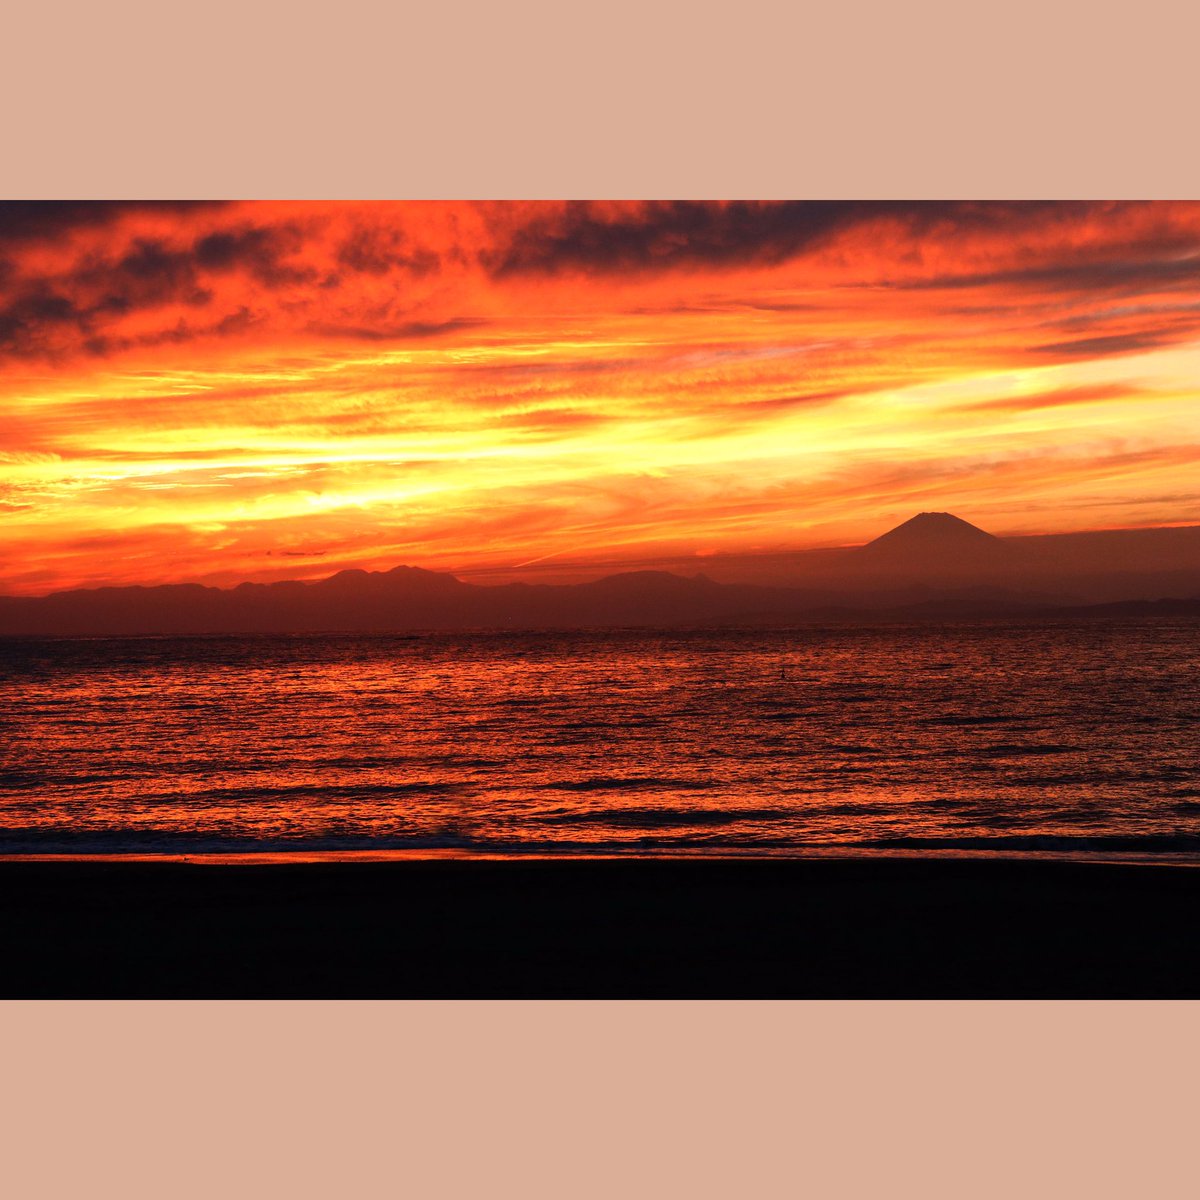 ✨ A Happy New Year✨

森戸海岸の爆焼け
過去PICより

#葉山
#森戸海岸
#hayama 
#富士山 
#世界で一番富士山が綺麗に見える場所葉山 
#湘南 
#カントリー同好会
#夕陽
#サンセット
#jp_mood
#japan_bestsunset
#japan_sunset_photogroup
#japan_great_view
#sunset_pics